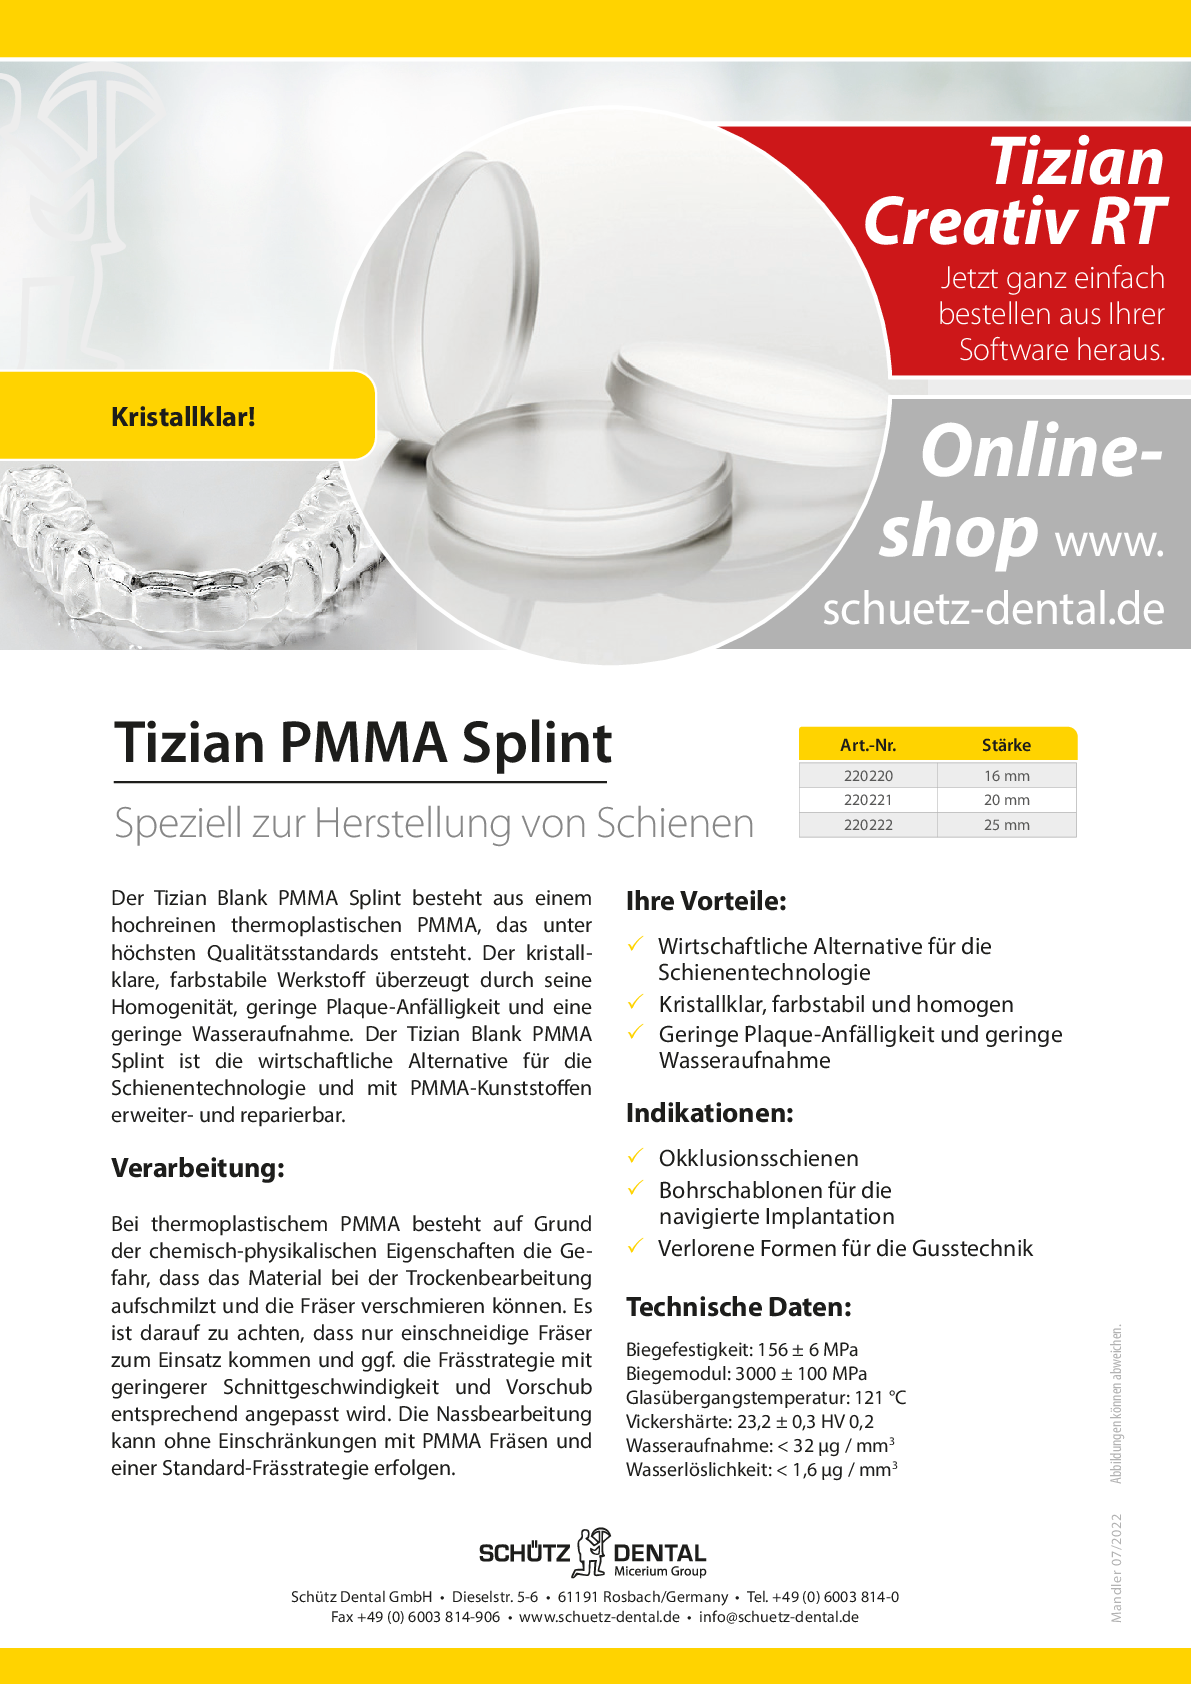 Tizian PMMA Splint Flyer (deutsch)